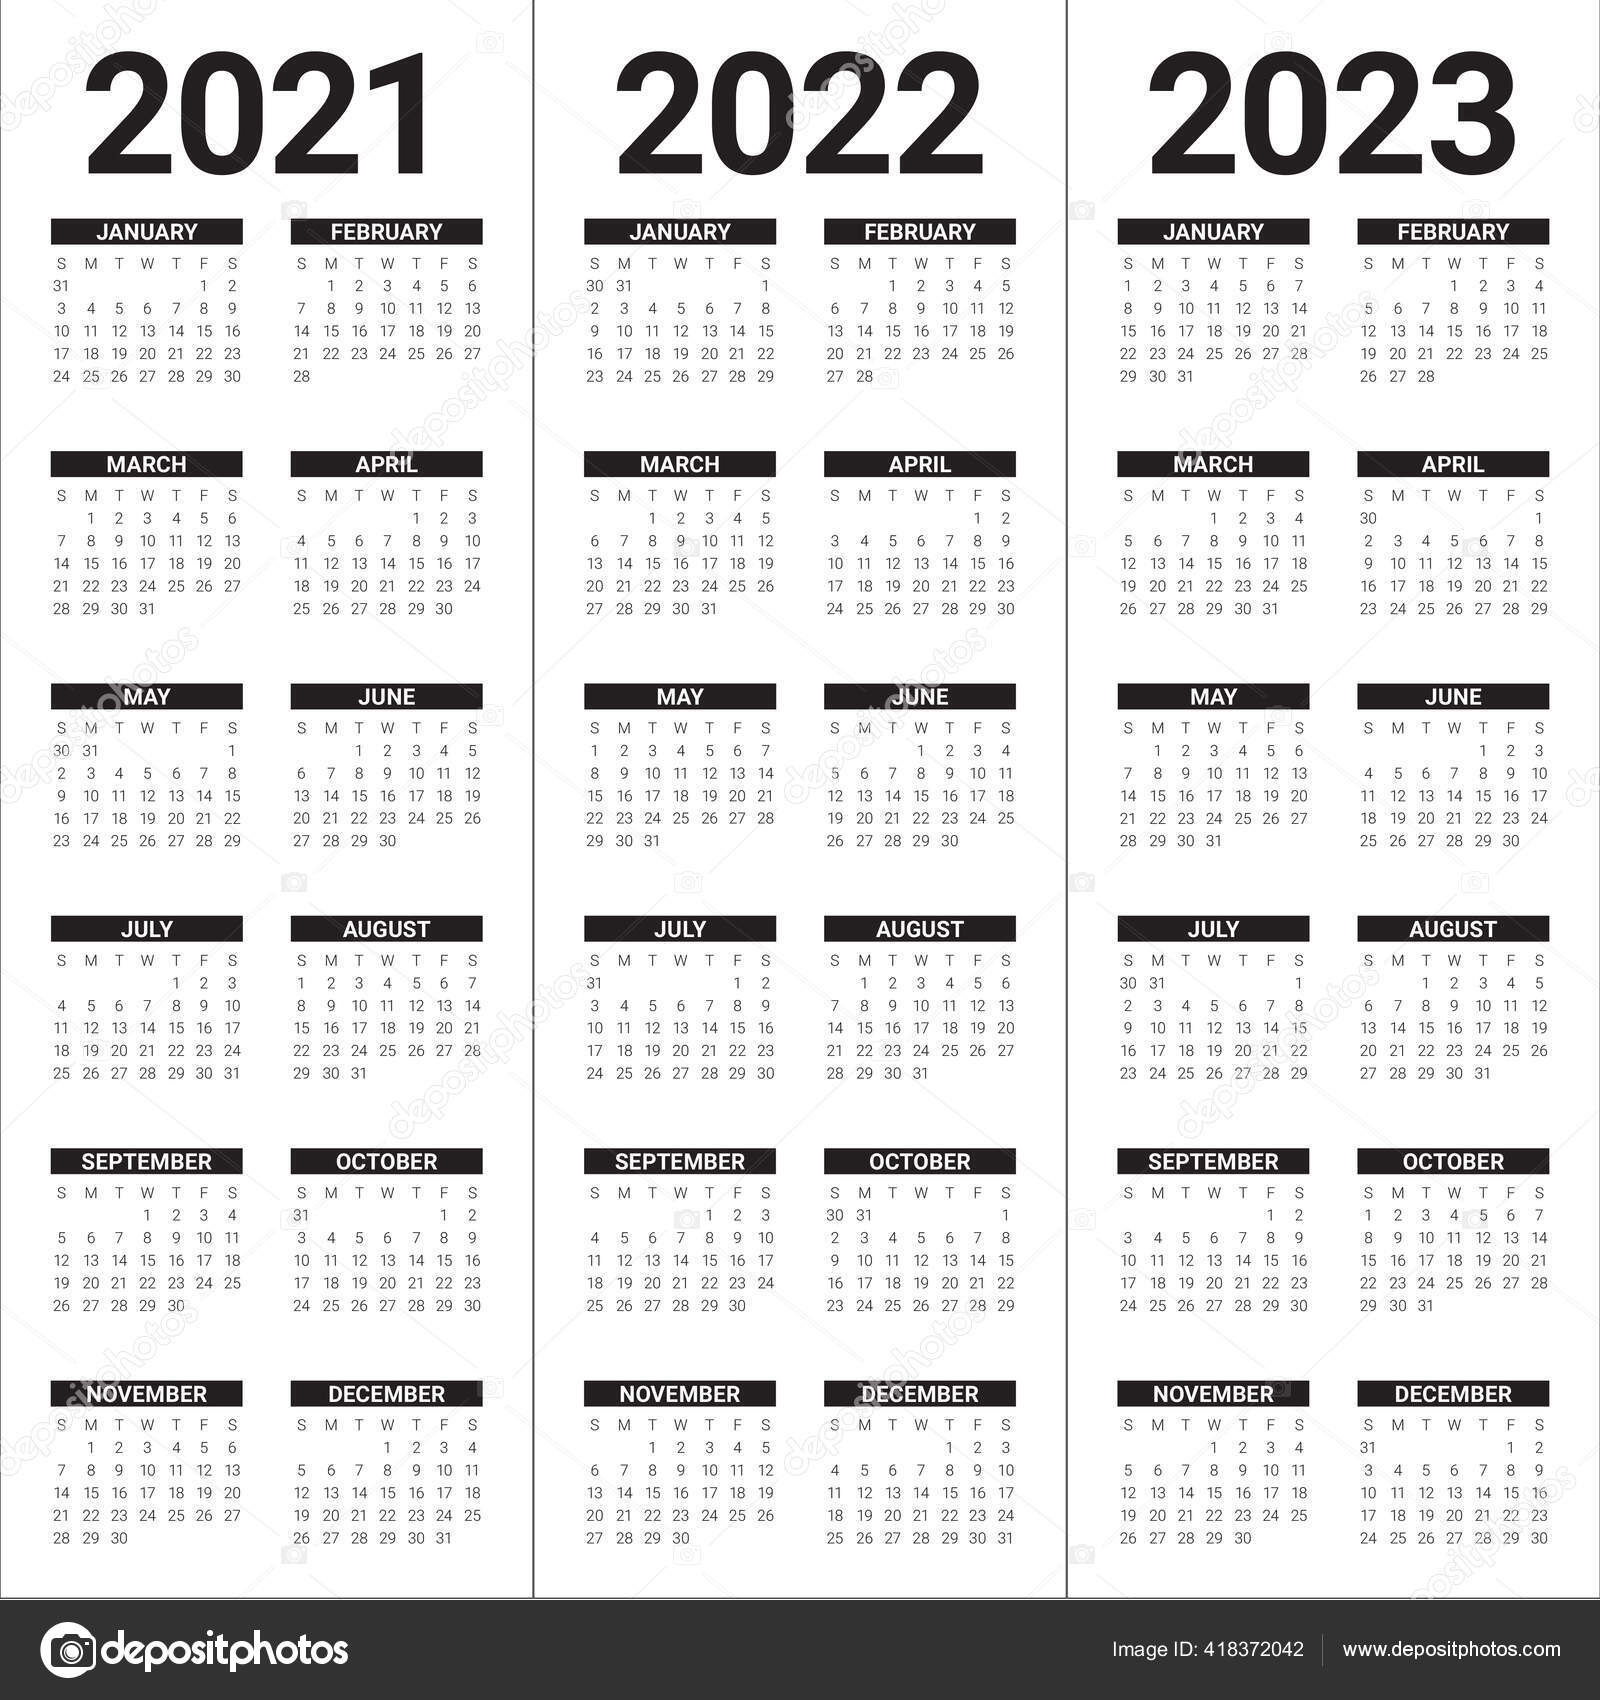 Fau 2022 2023 Calendar Year 2021 2022 2023 Calendar Vector Design Template Simple Clean Stock  Vector Image By ©Dolphfynlow #418372042